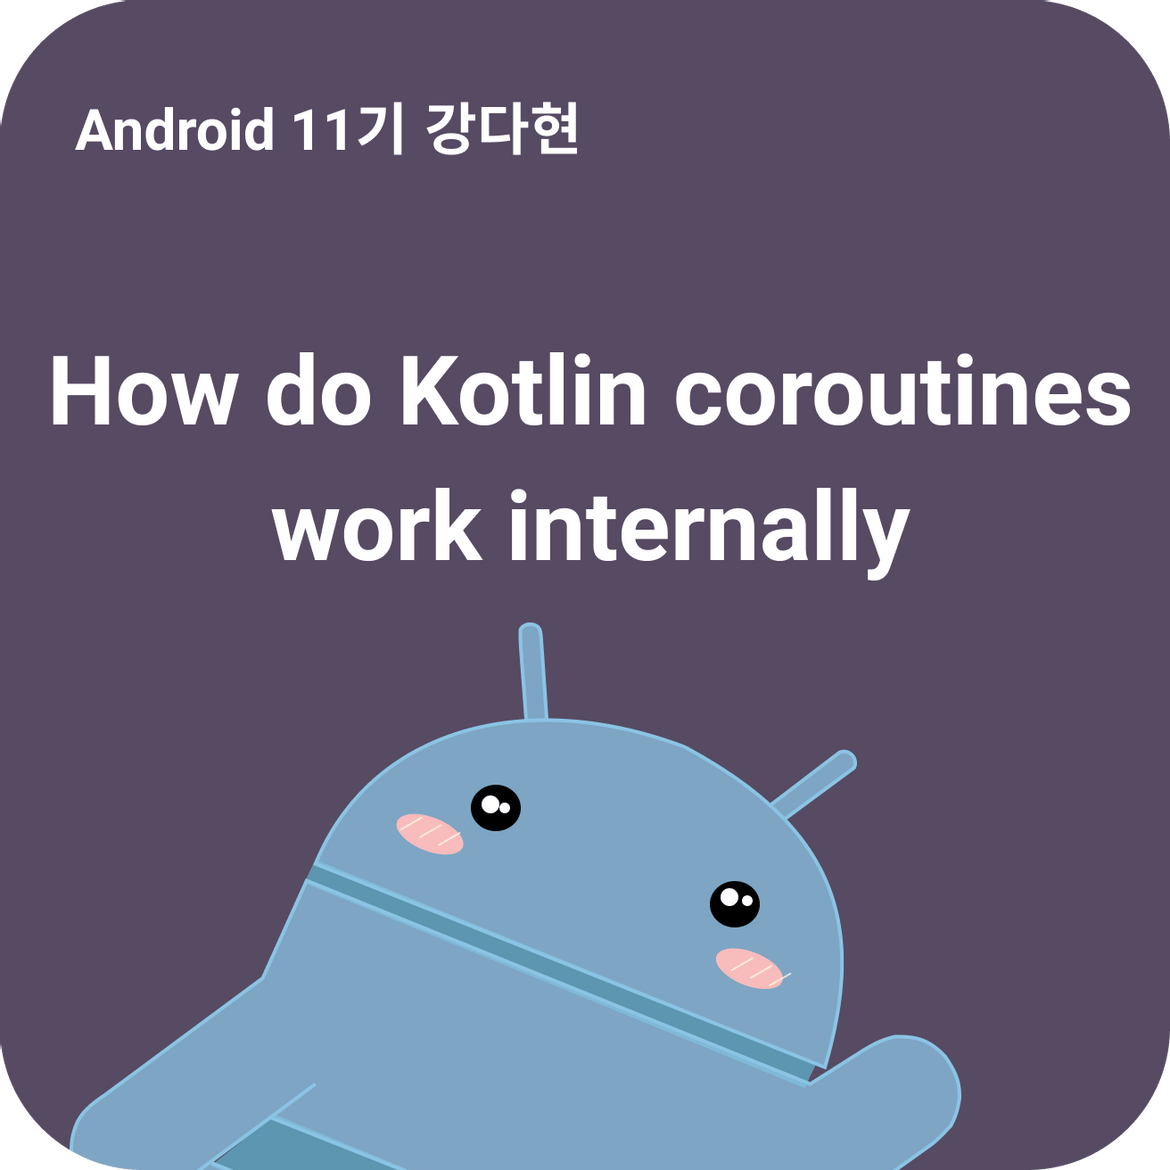 How do Kotlin coroutines work internally